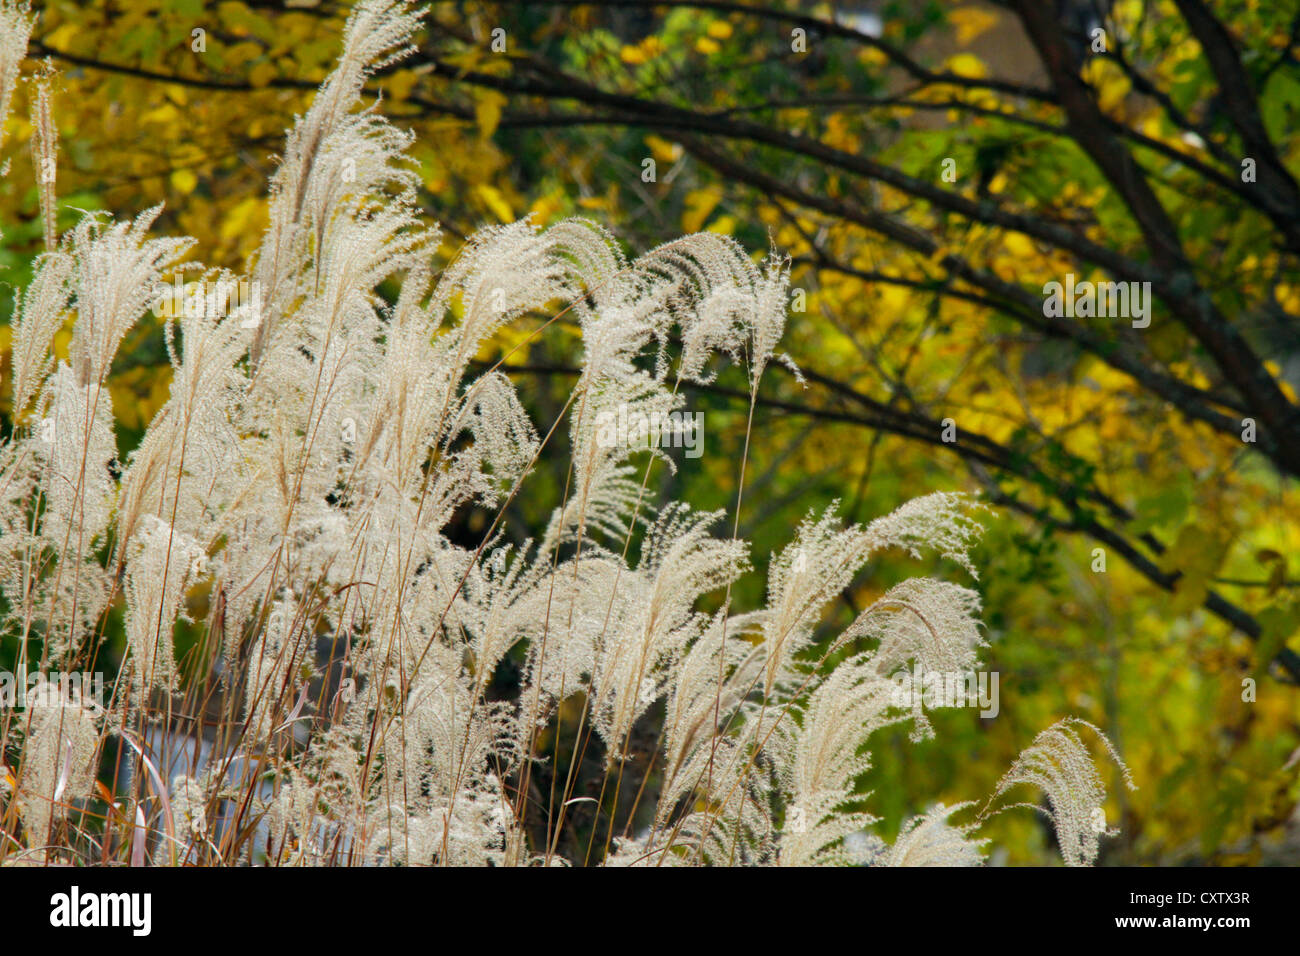 Japanese Susuki grass with Autumn leaf color by the Lake Sai-ko Japan Stock Photo